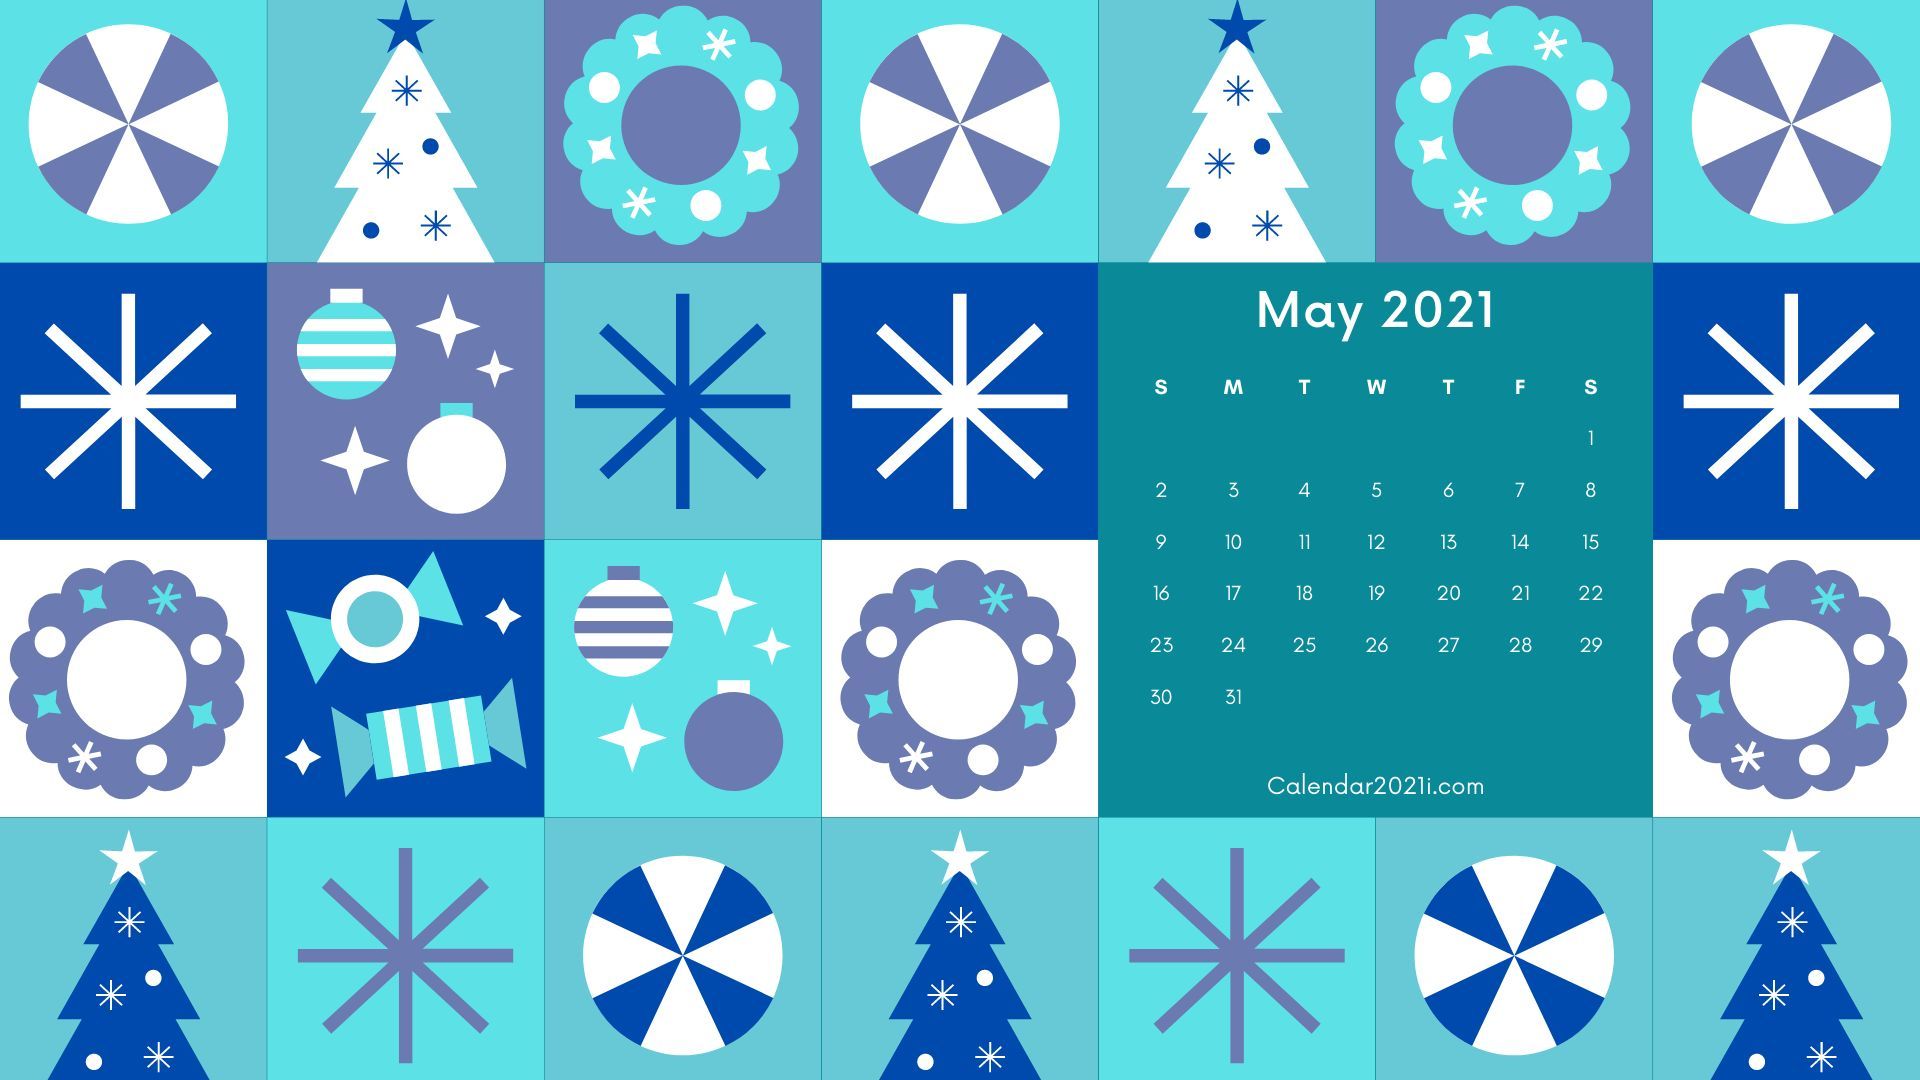 May 2021 Calendar Wallpaper. Calendar wallpaper, 2021 calendar, Calendar